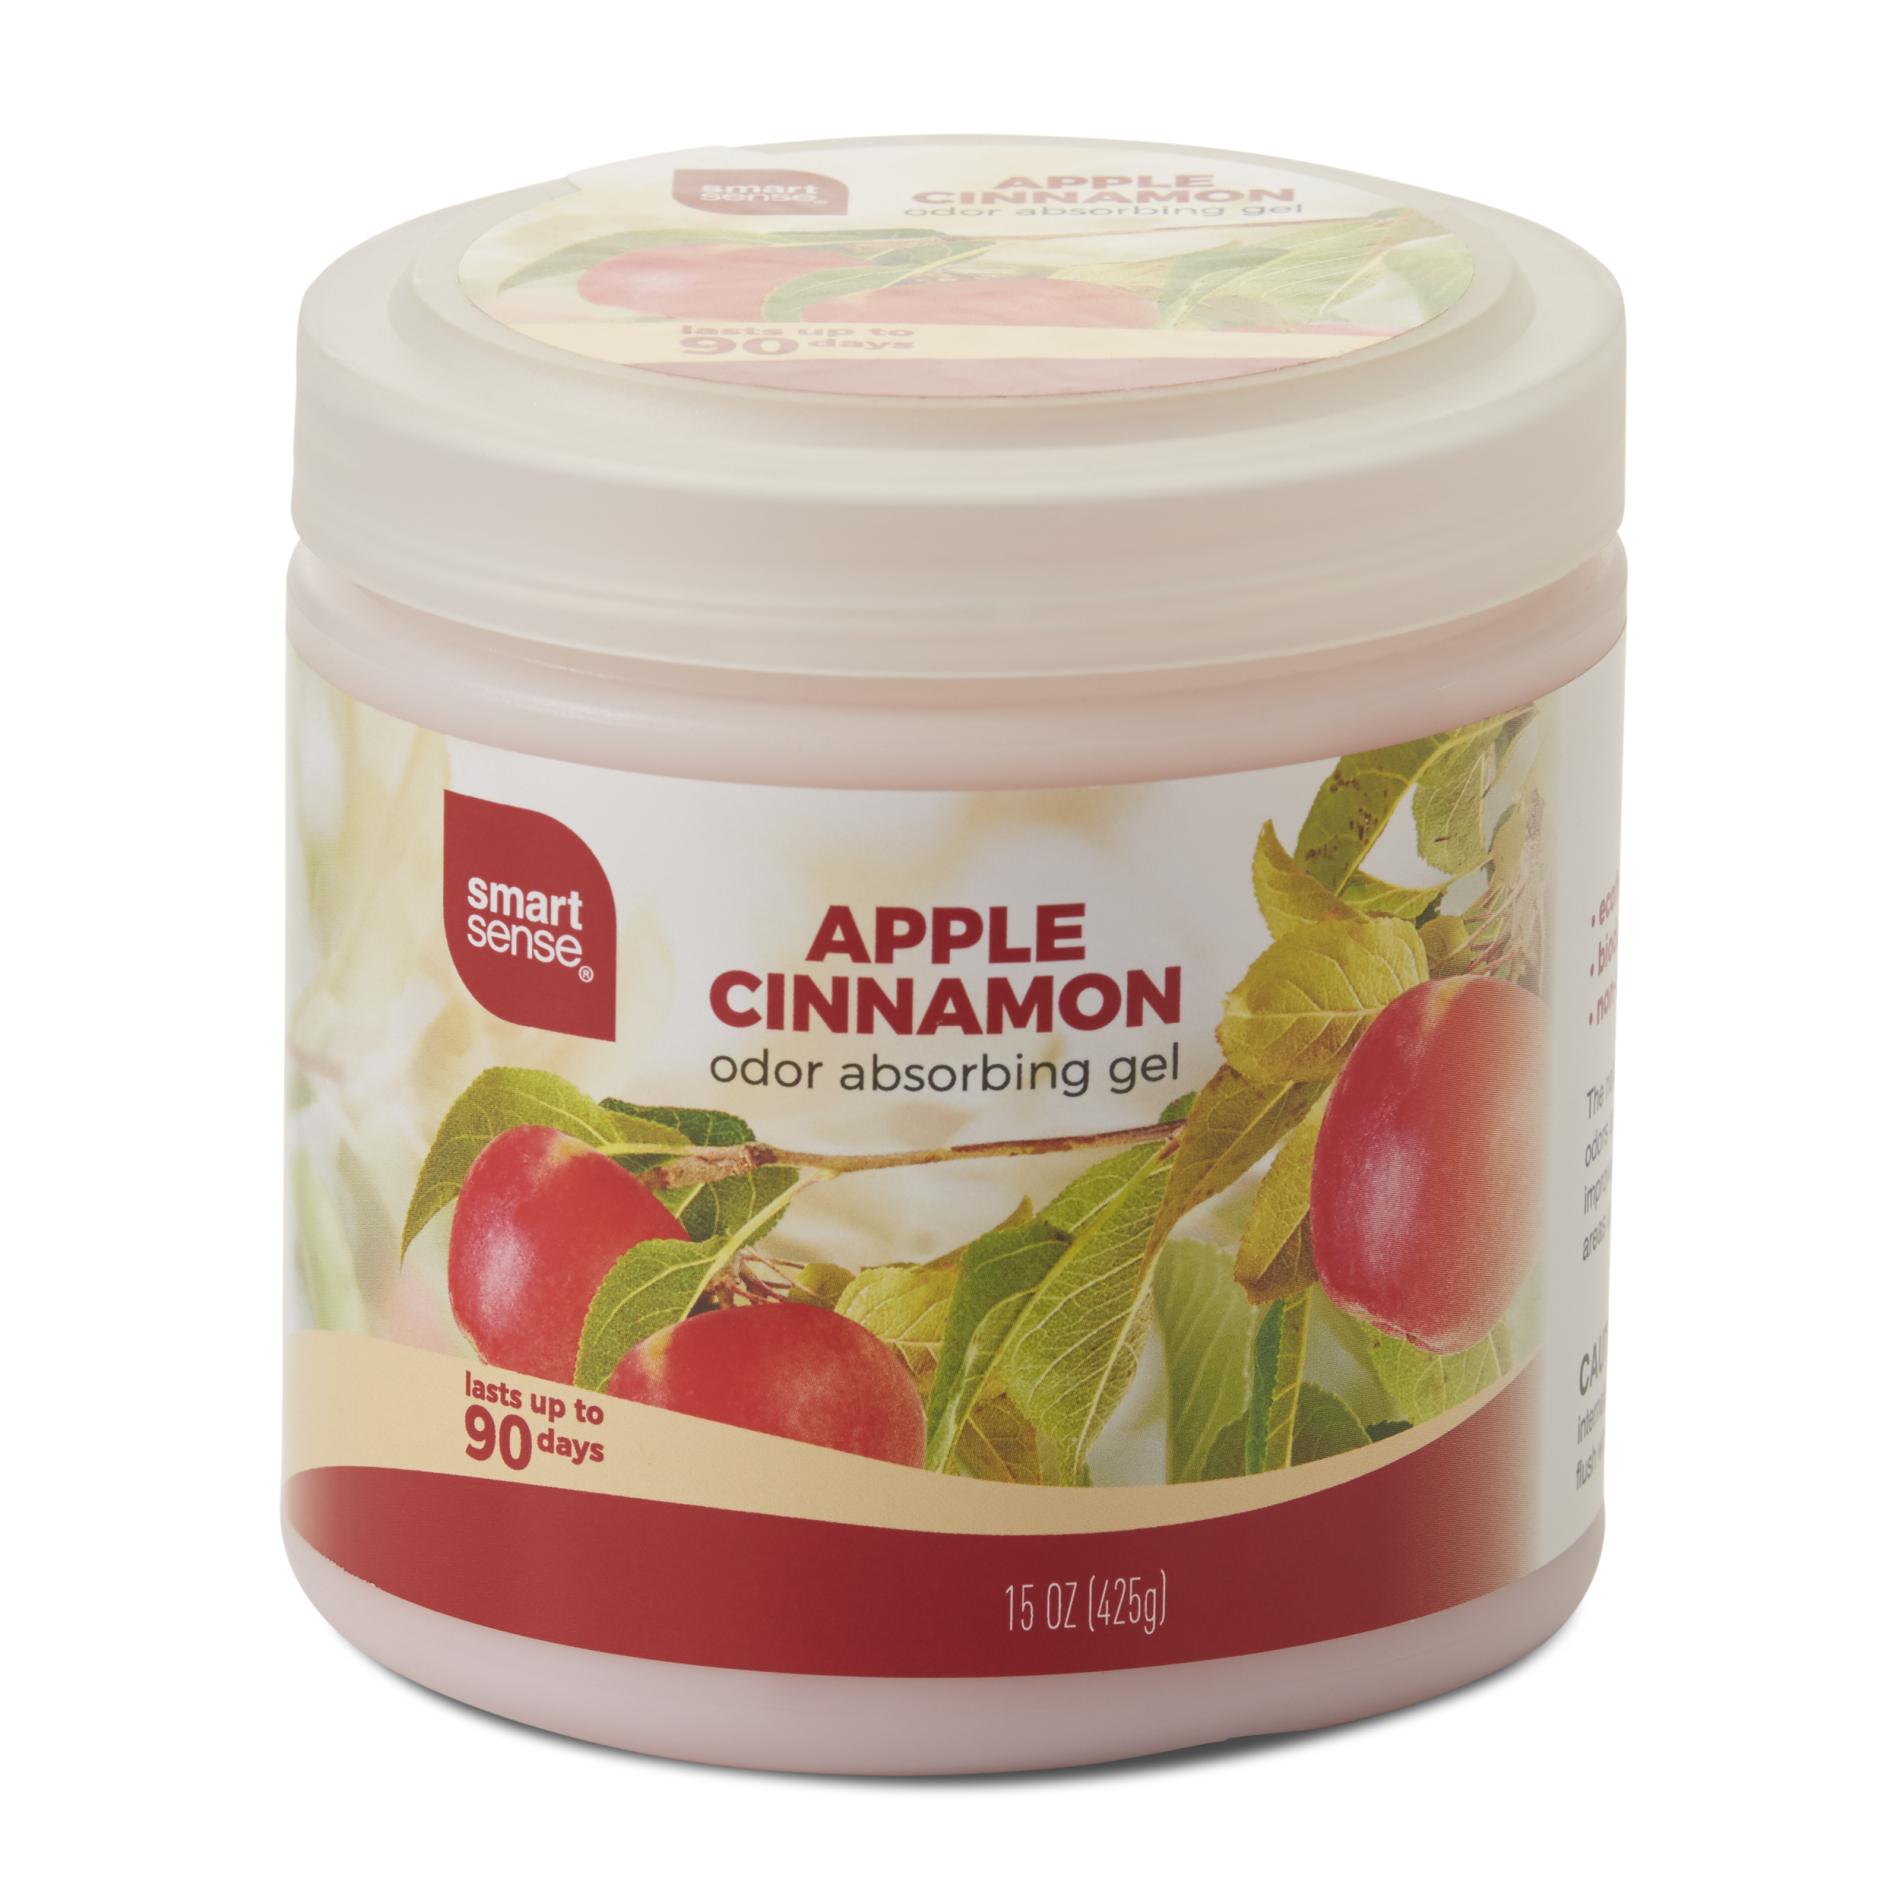 Smart Sense Apple Cinnamon Odor Absorbing Gel